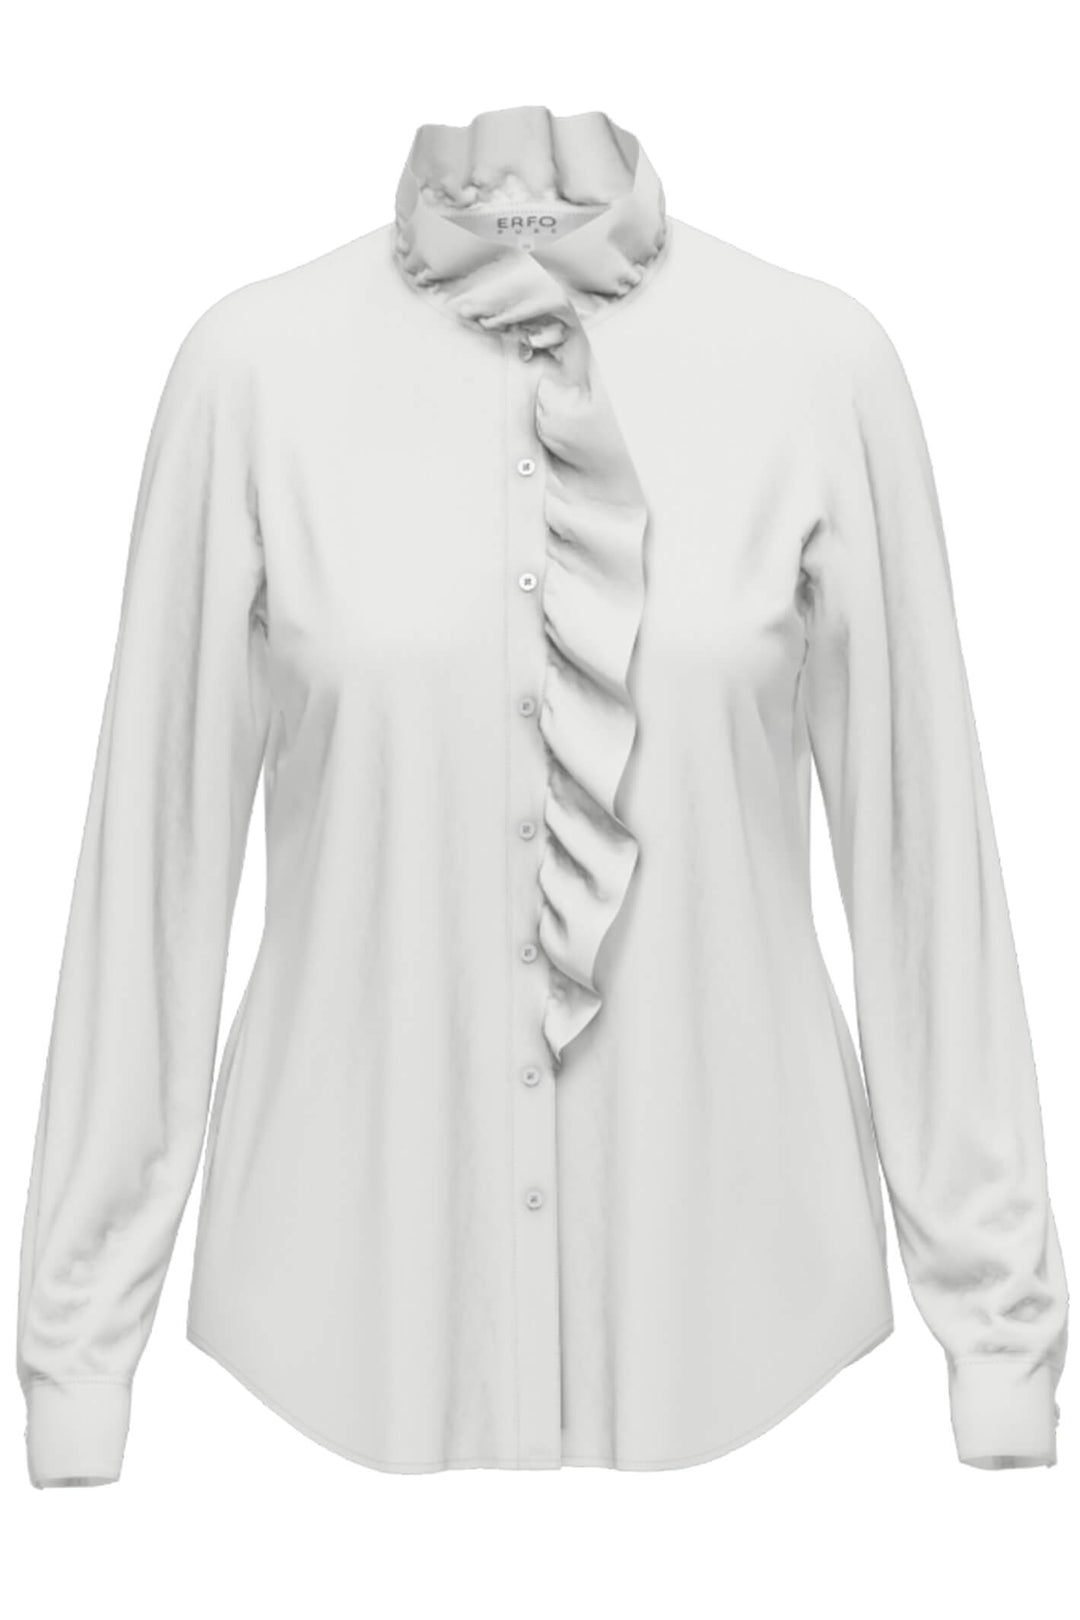 Erfo 111100400 White Ruffle Collar Blouse - Shirley Allum Boutique